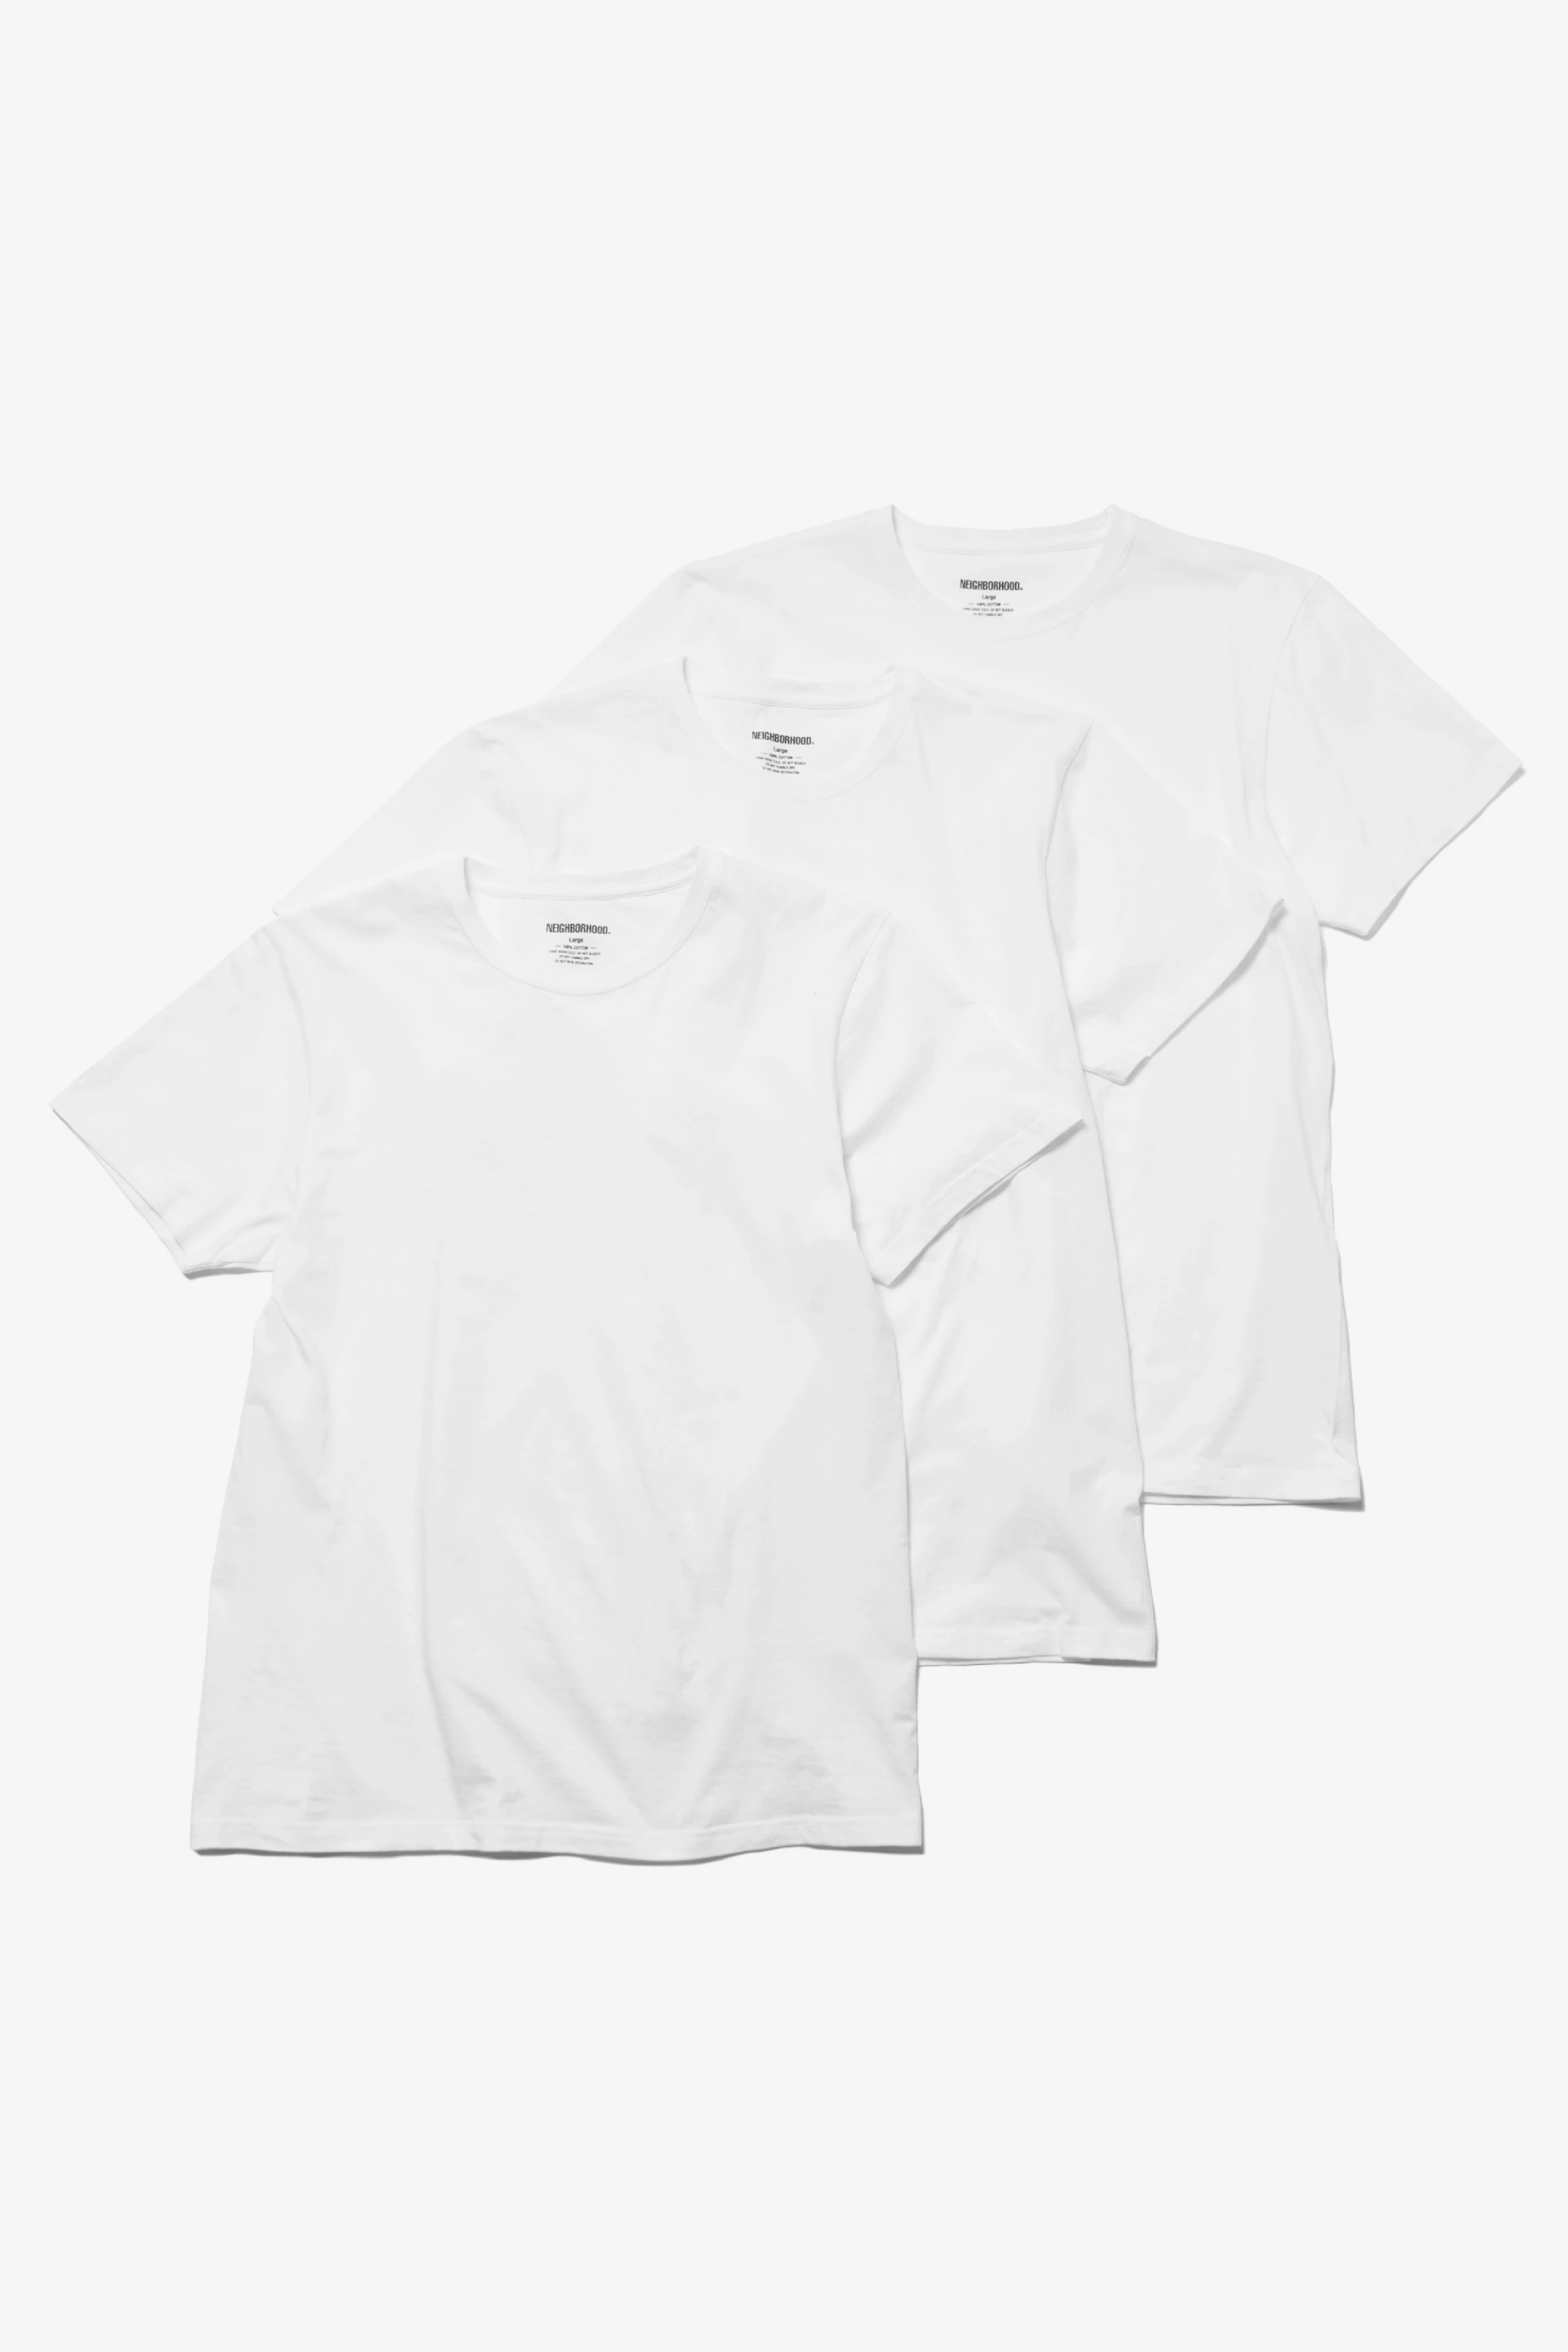 Selectshop FRAME - NEIGHBORHOOD Classic 3pac / C-Crew Tee T-Shirts Dubai